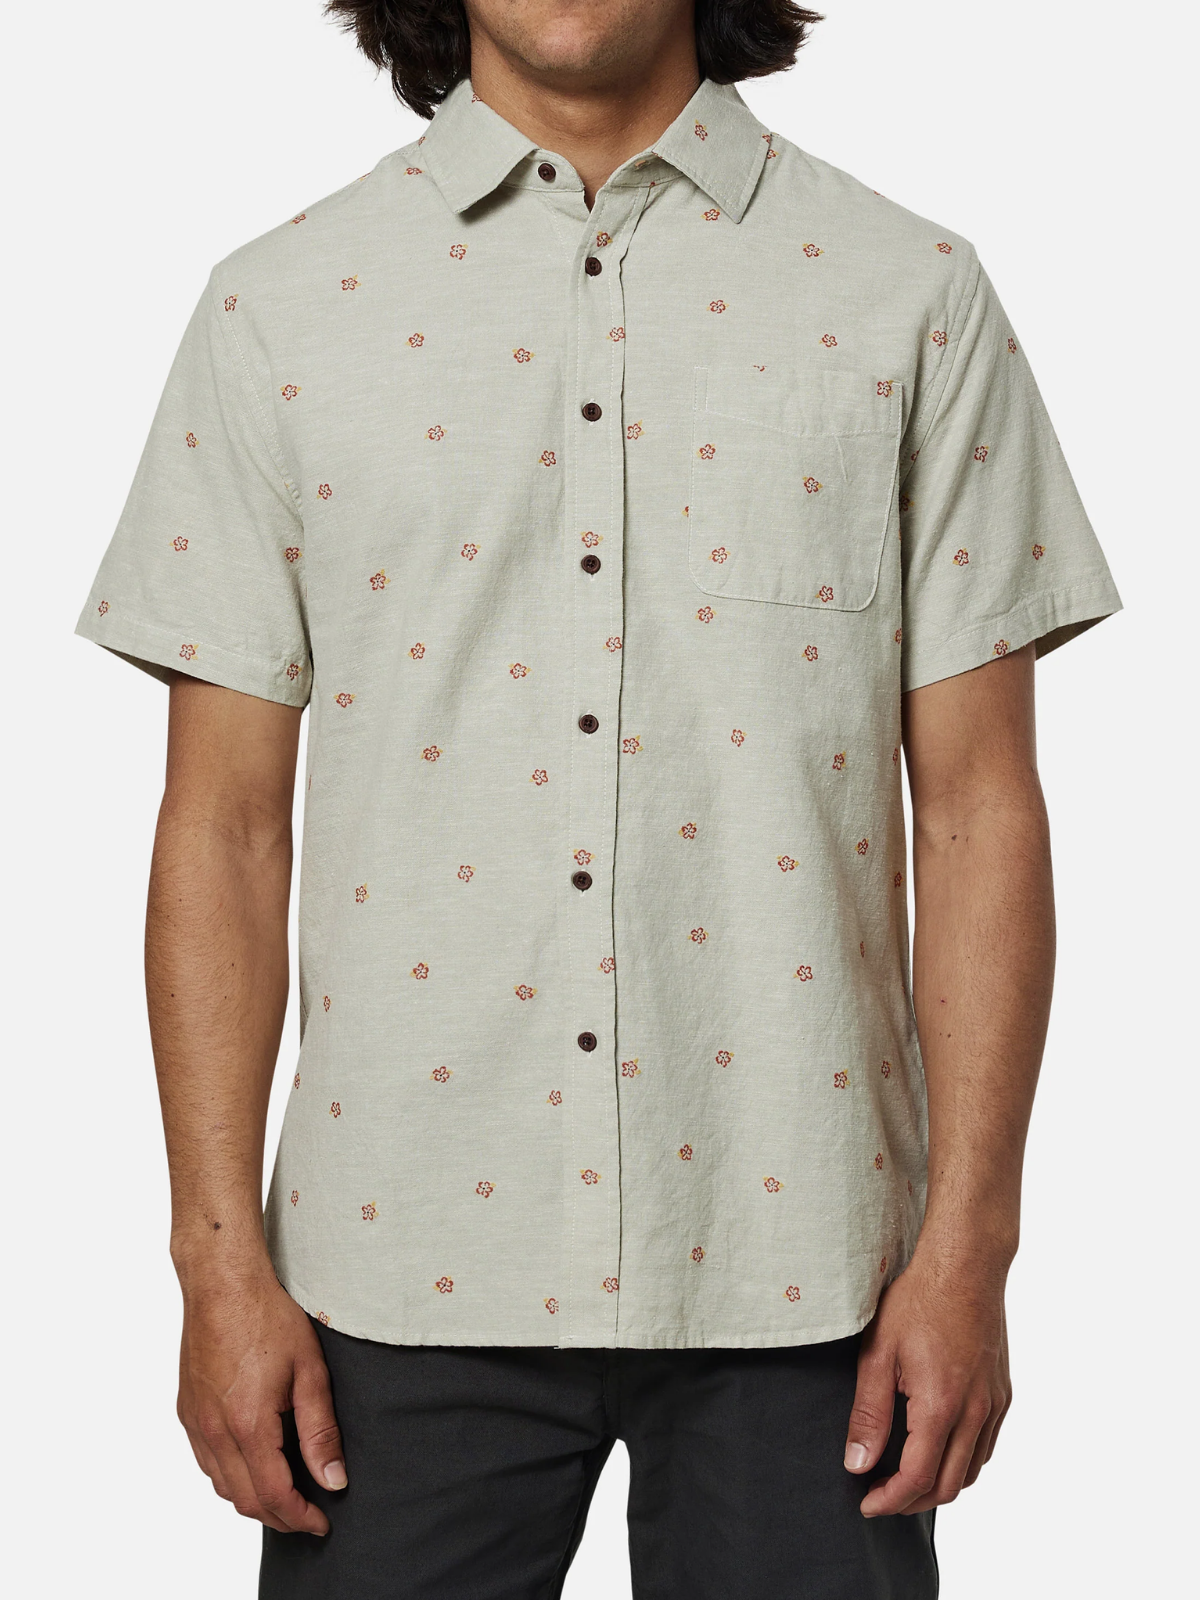 katin plume shirt button up desert sage green floral design ss short sleeve collared top kempt athens ga georgia men's clothing store